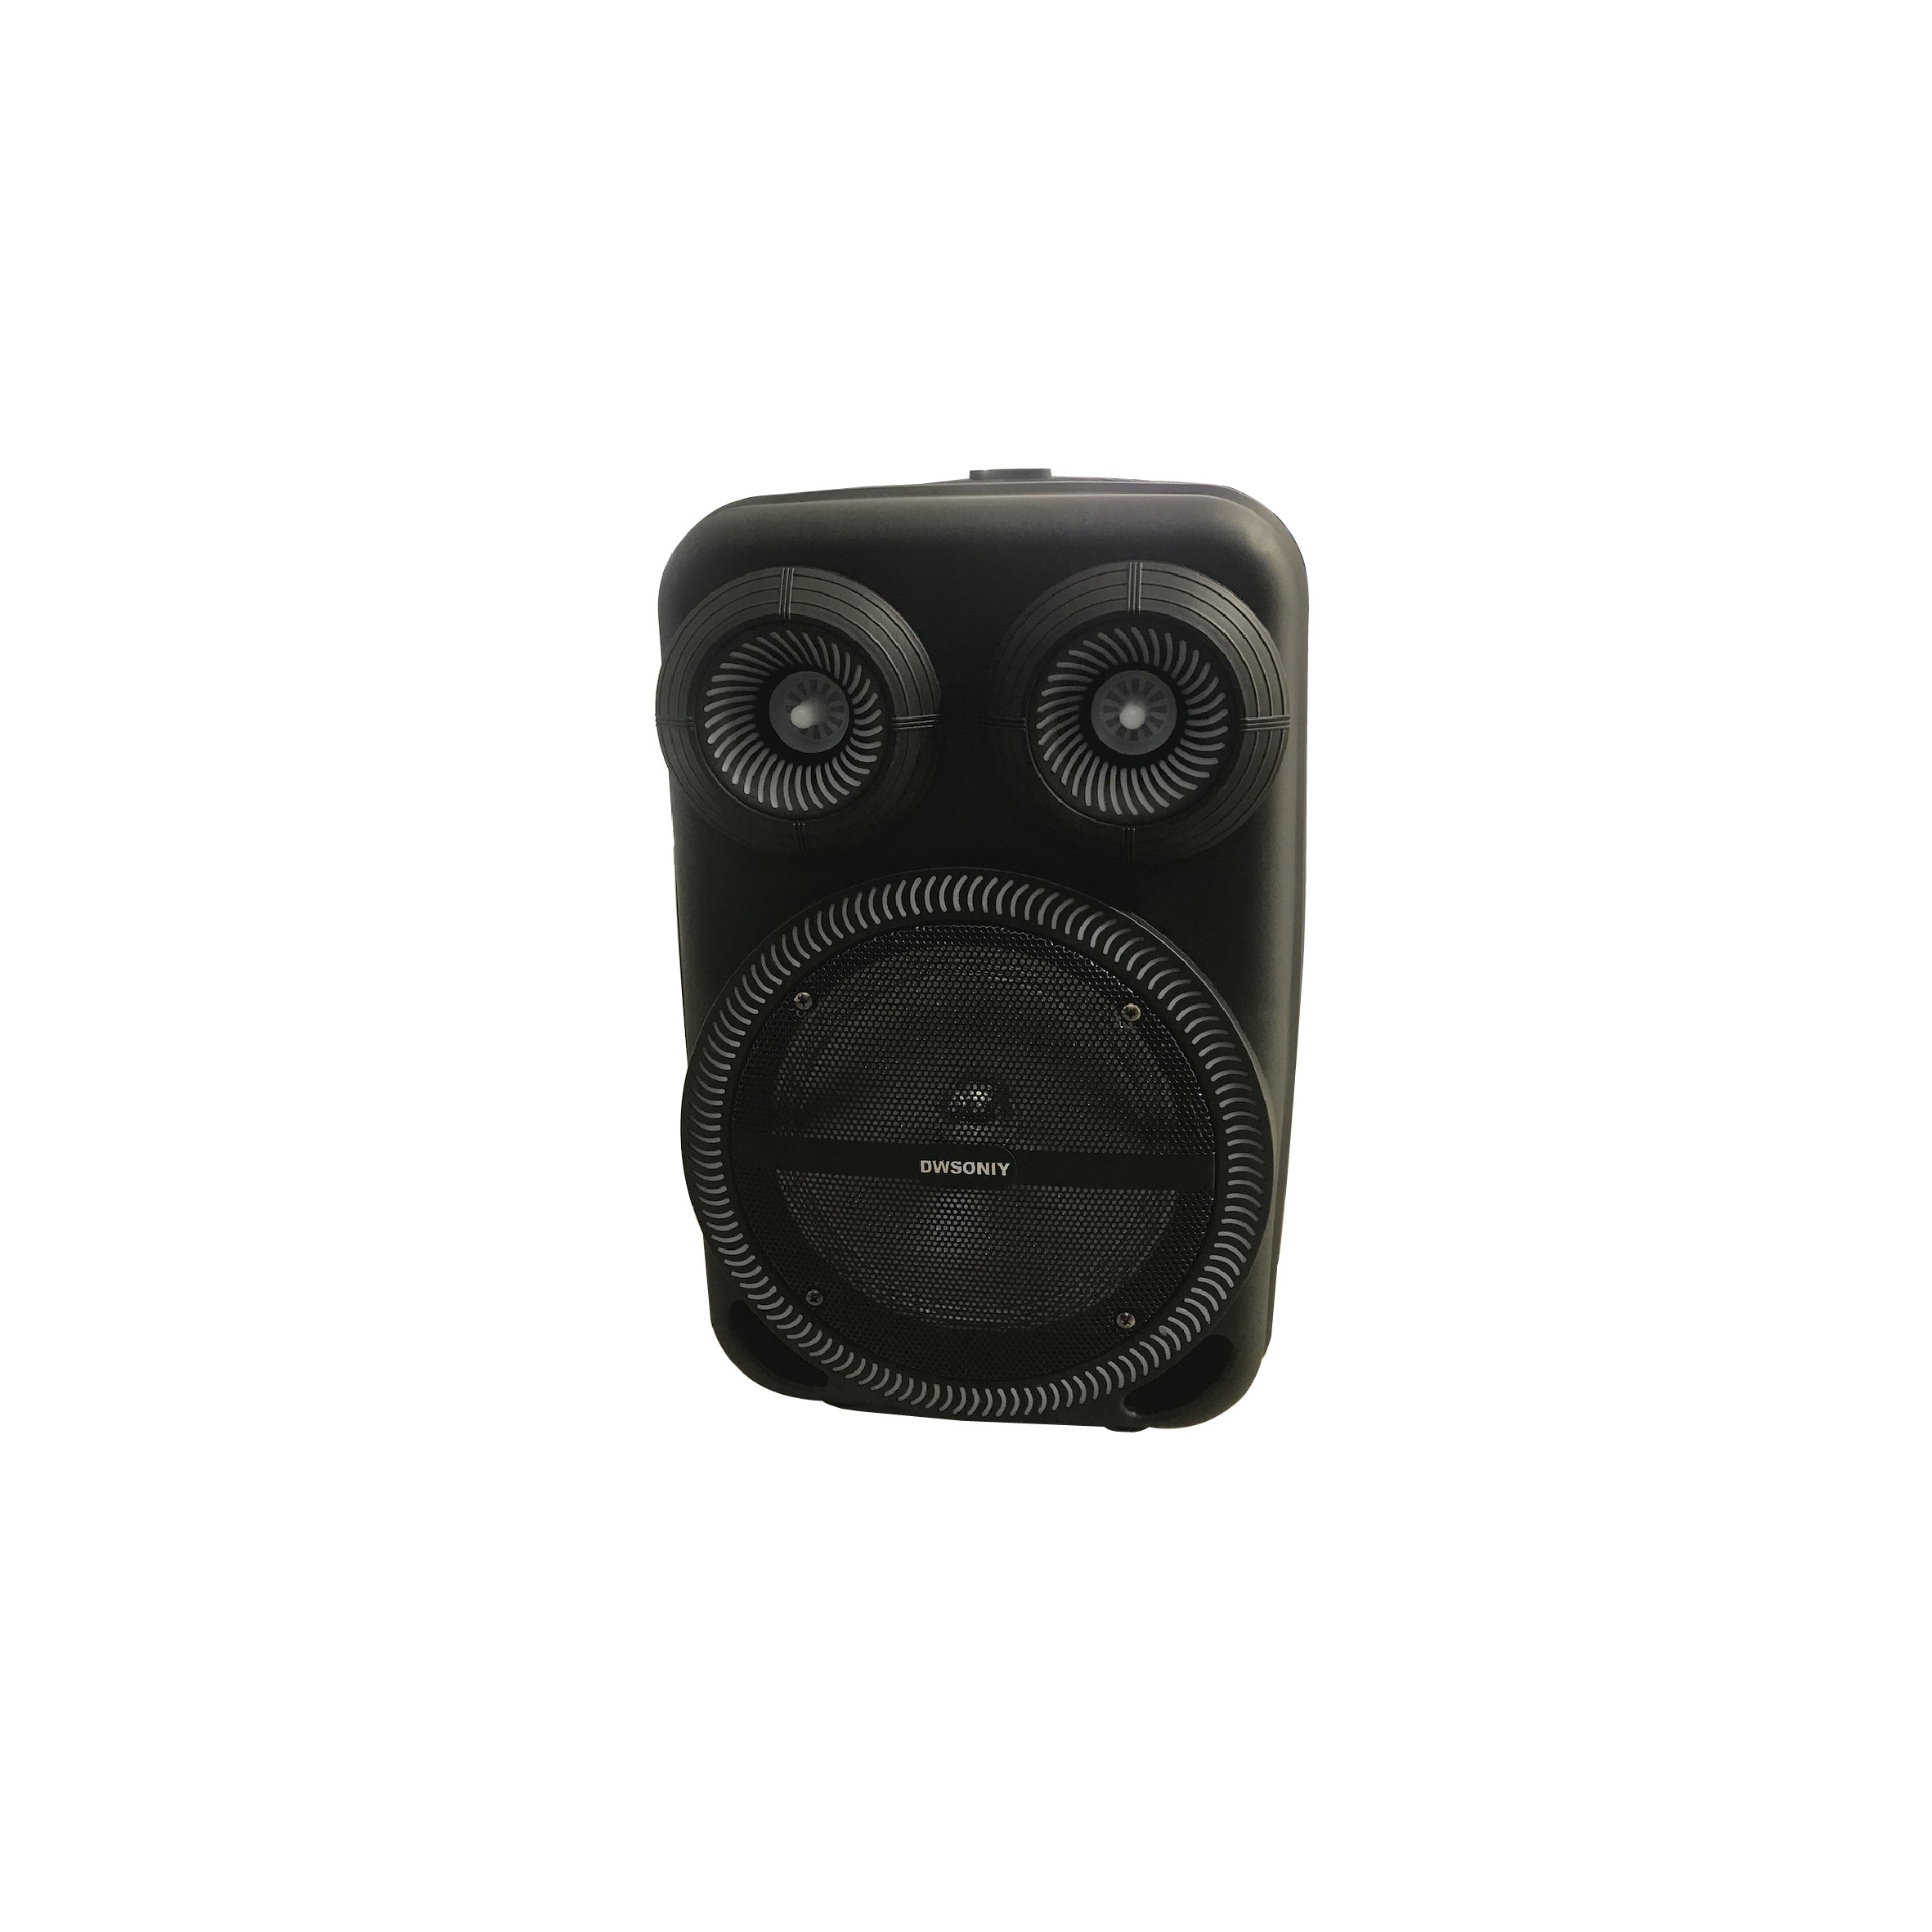 Dwsoniy Speaker 10-Inch, Built In USB, Aux, Mic Input, DC 5V, DW-1018